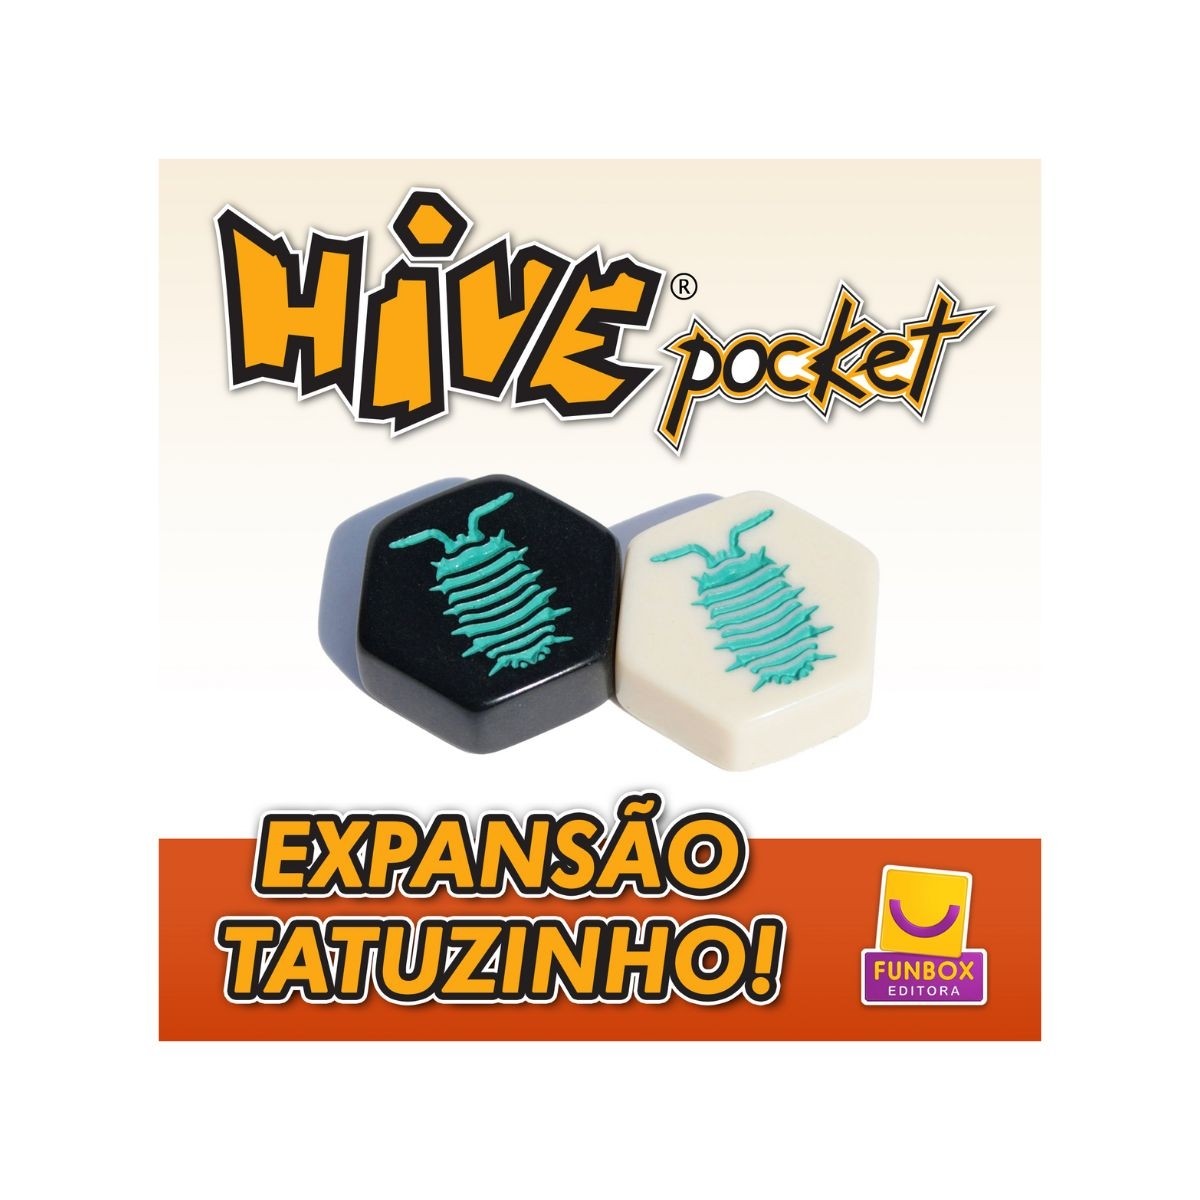 Hive Pocket Expansão: Tatuzinho - Funbox